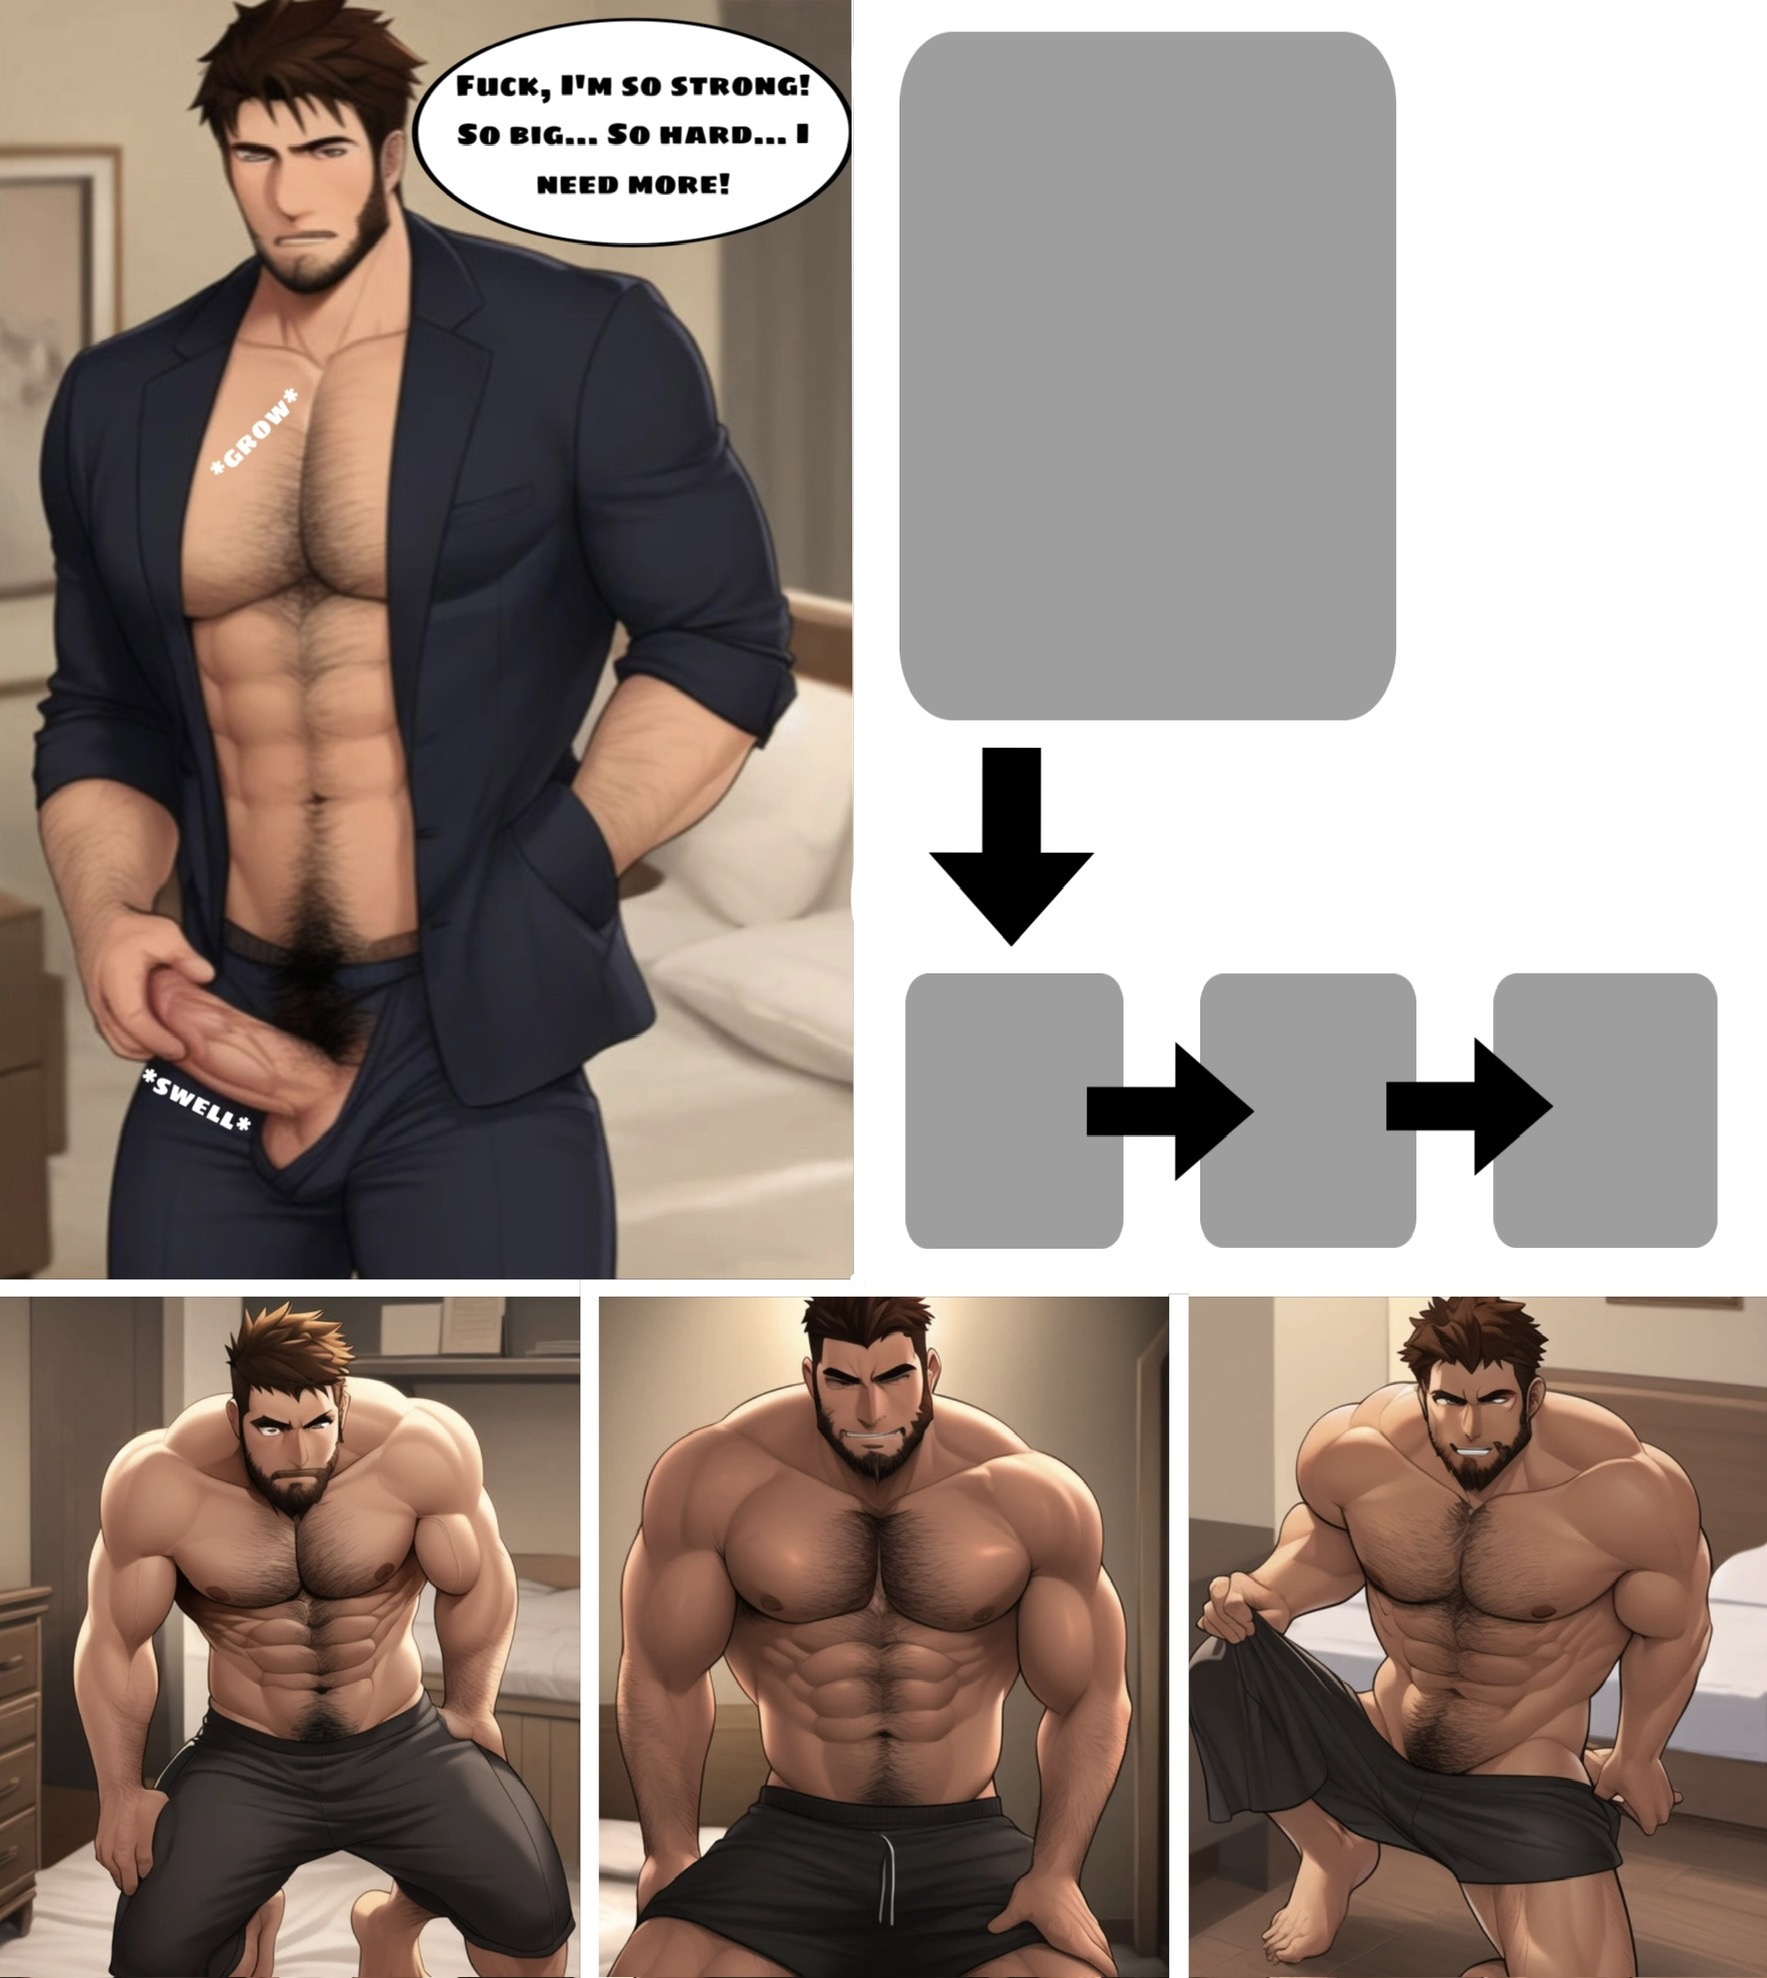 Gay muscle porn comics